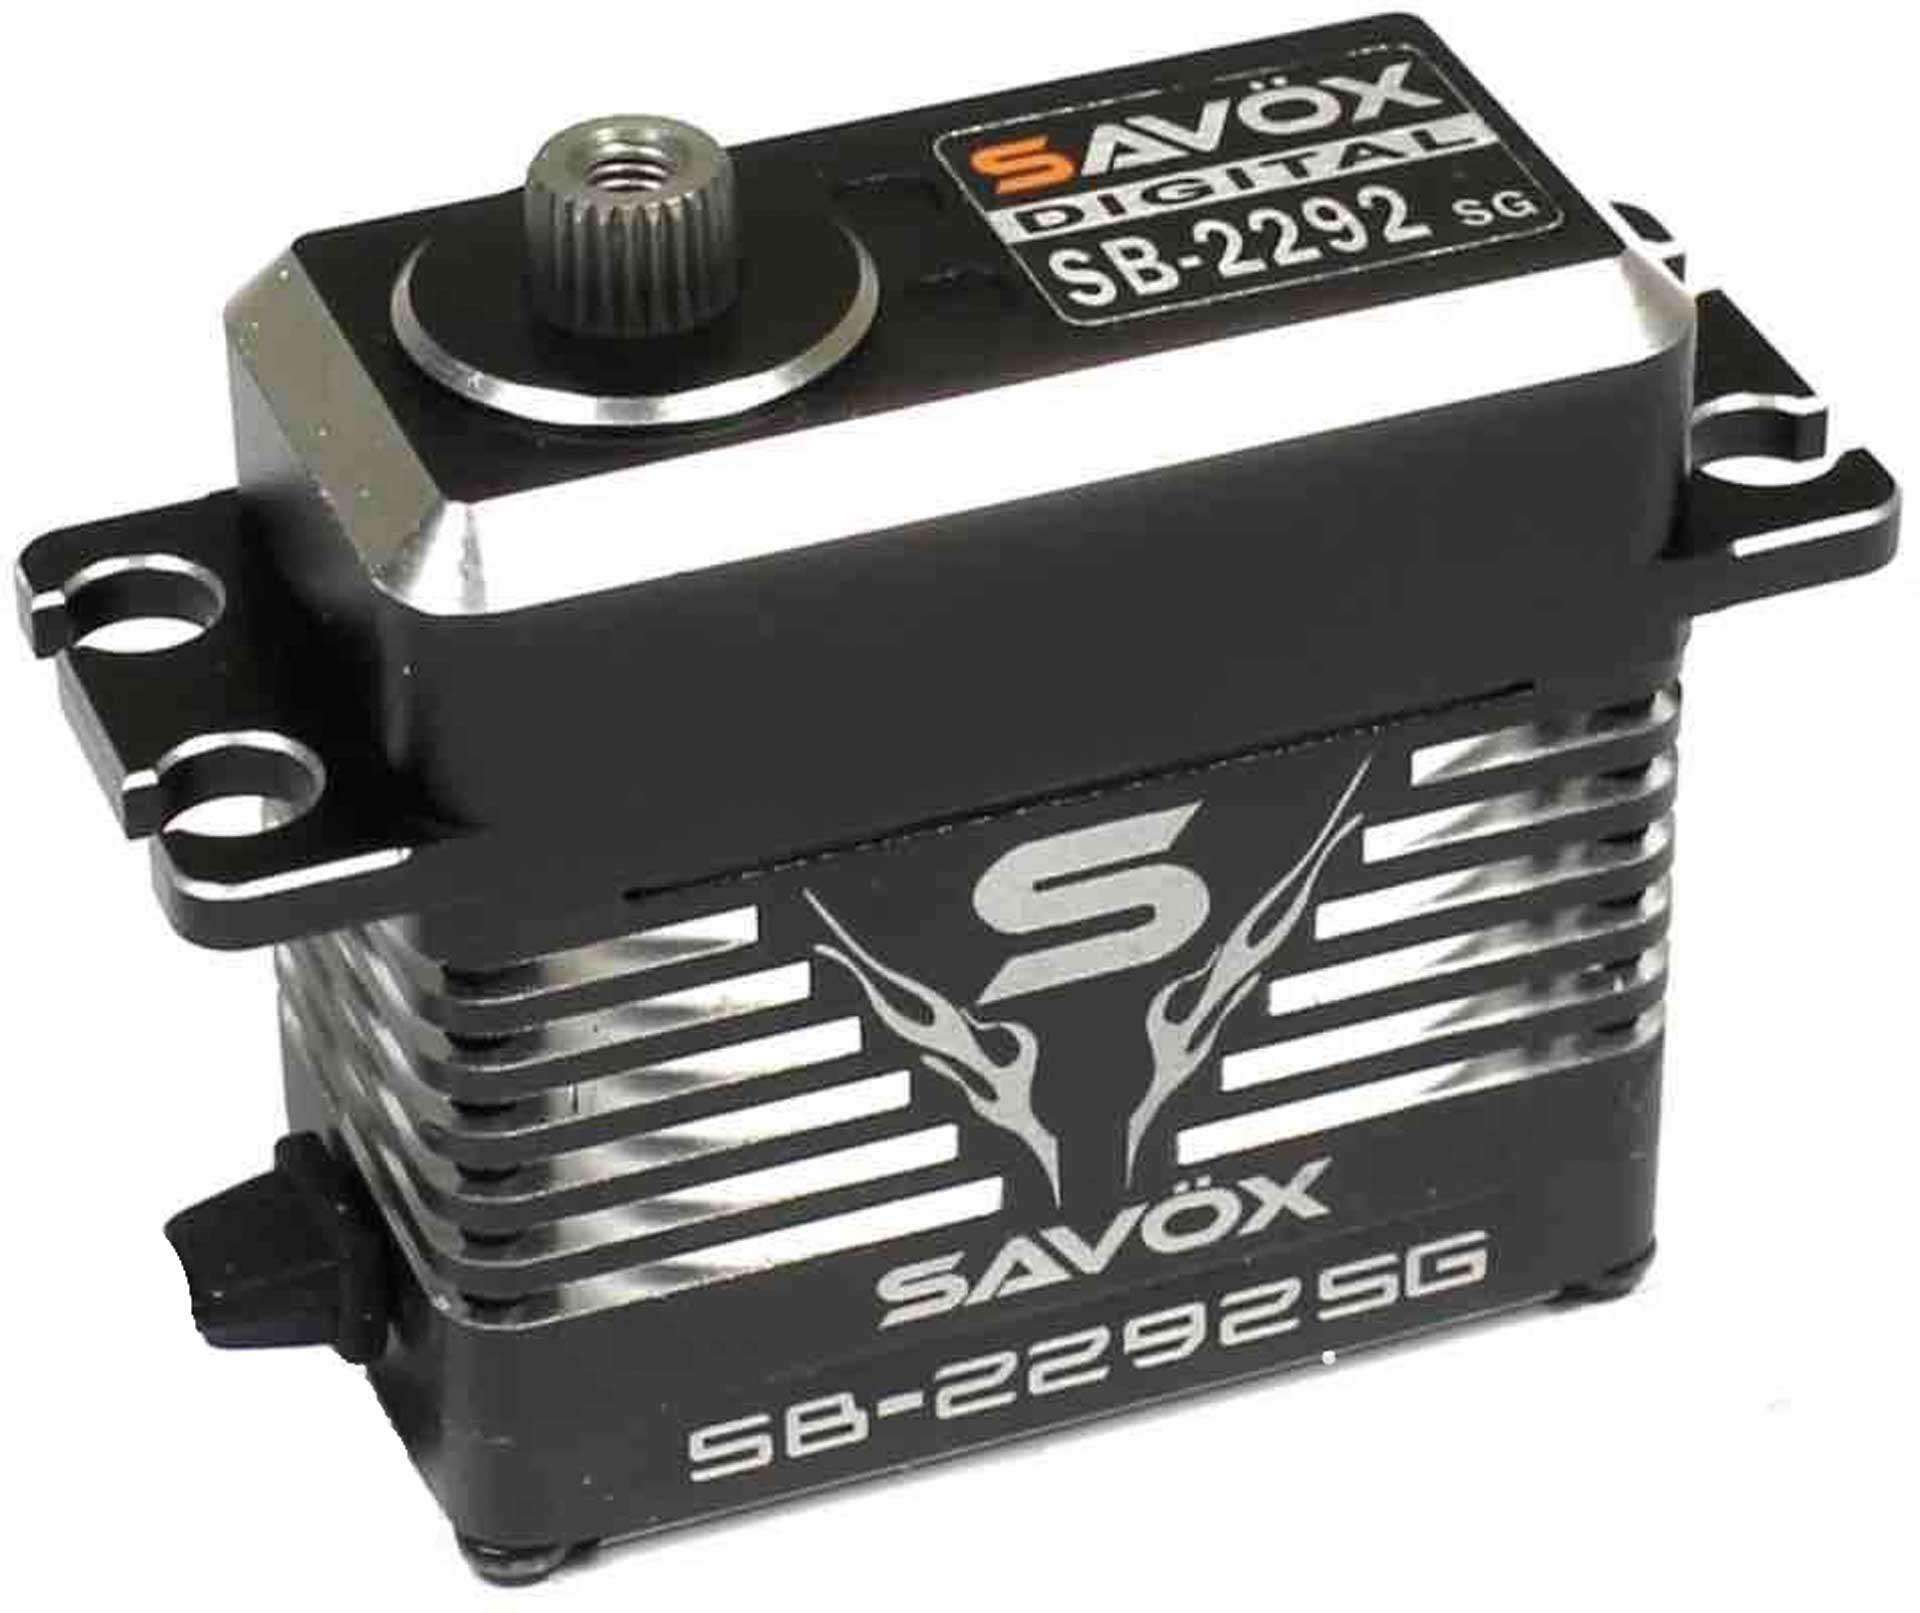 SAVÖX SB-2292SG (8,4V/31KG/0,07s) BRUSHLESS DIGITAL HV SERVO BLACK LINE